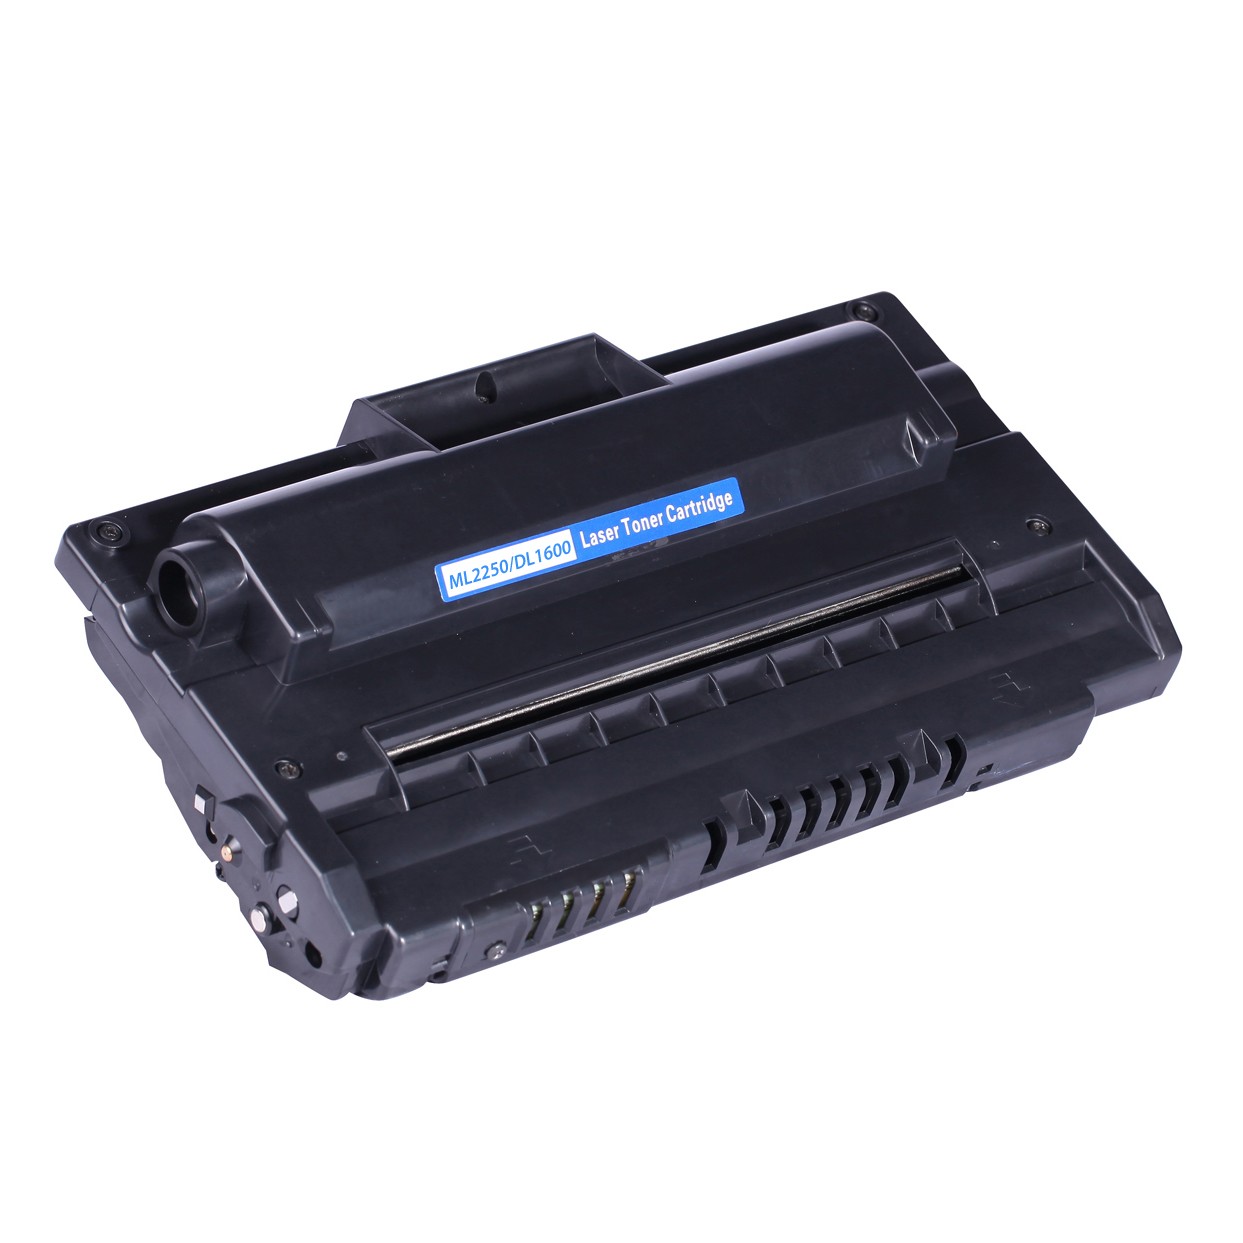 Compatible toner cartridge for Samsung ML2250/DL1610